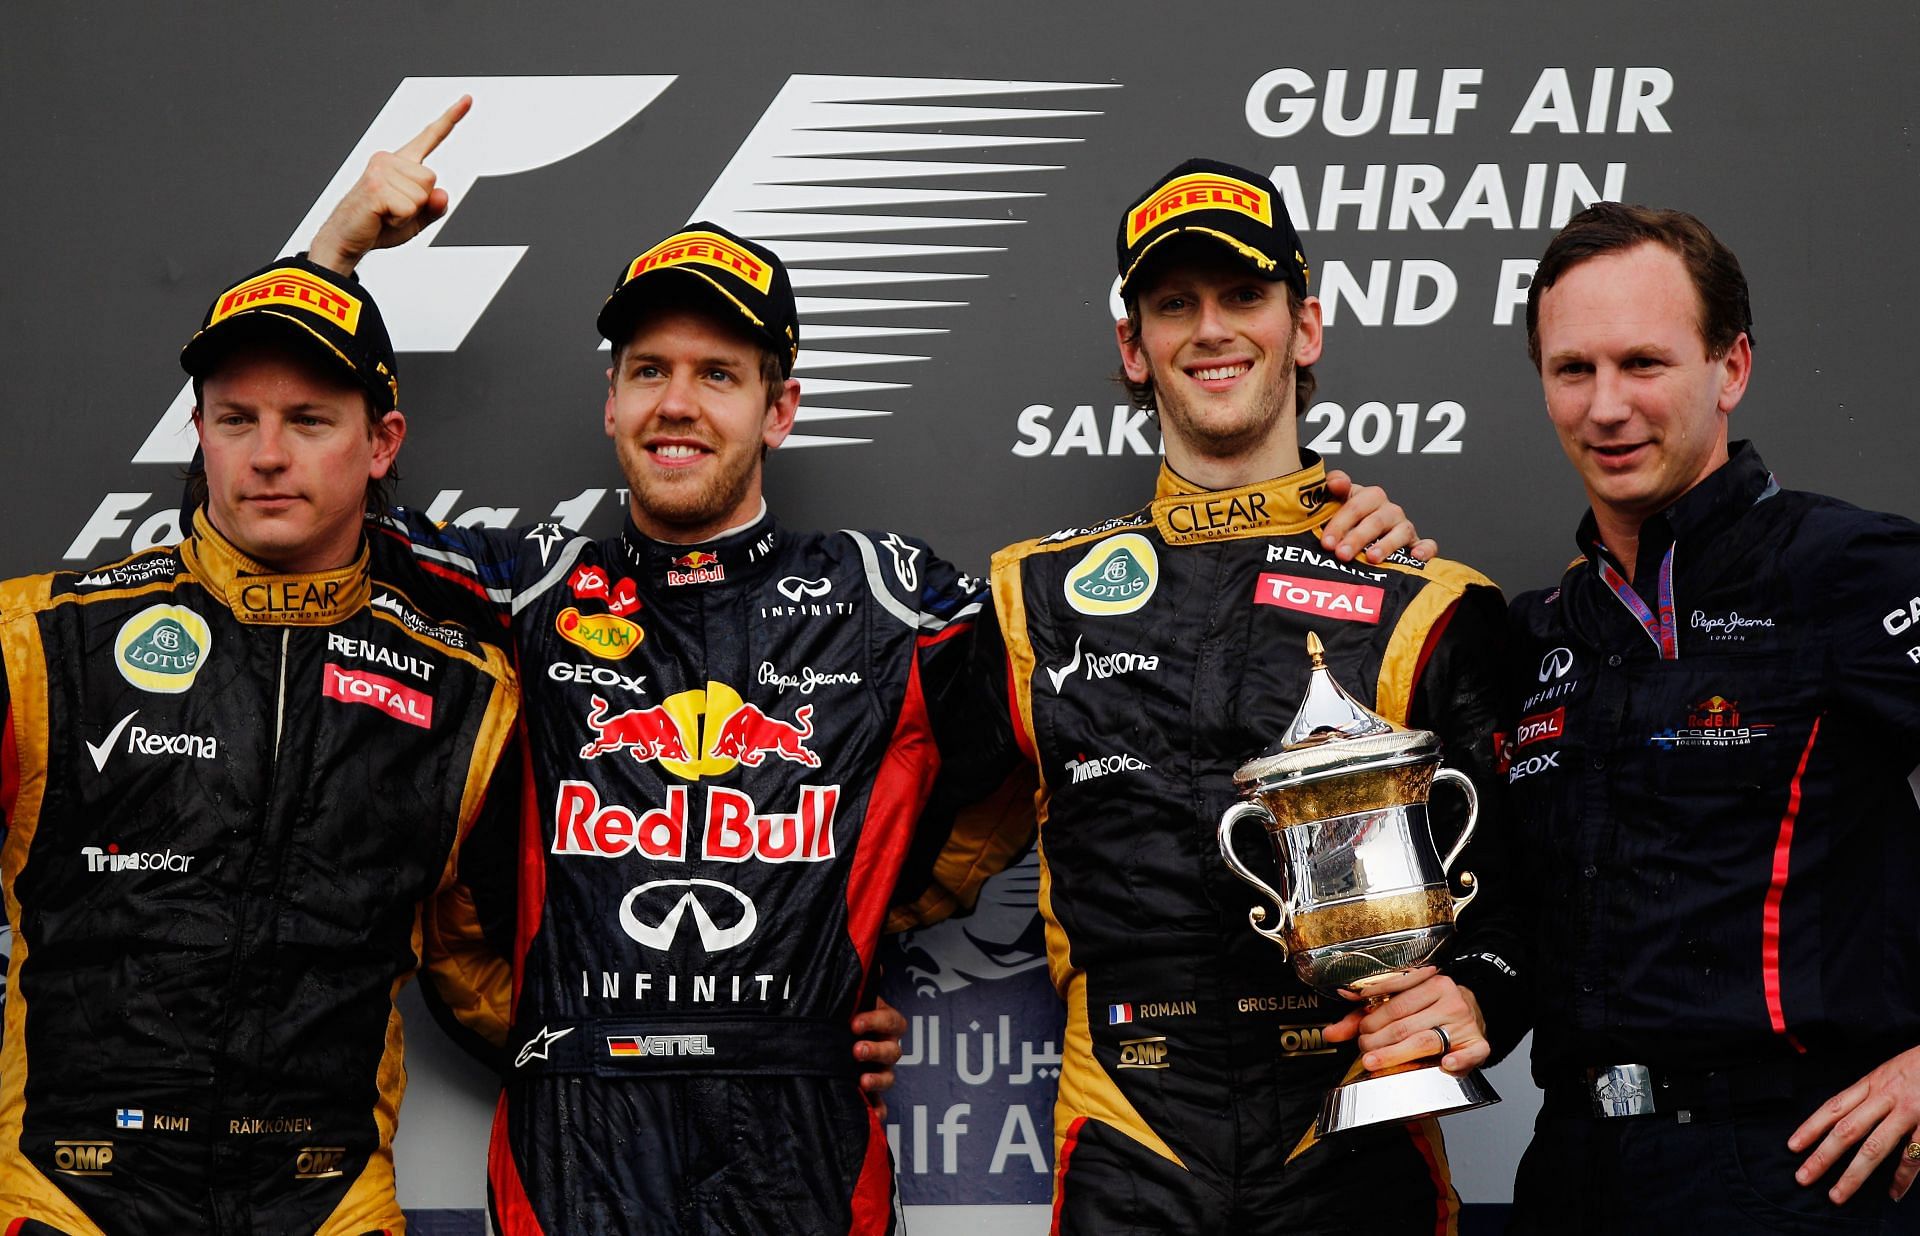 (L-R) Kimi Raikkonen, Sebastian Vettel, Romain Grosjean and Christian Horner share the 2012 Bahrain Grand Prix podium.